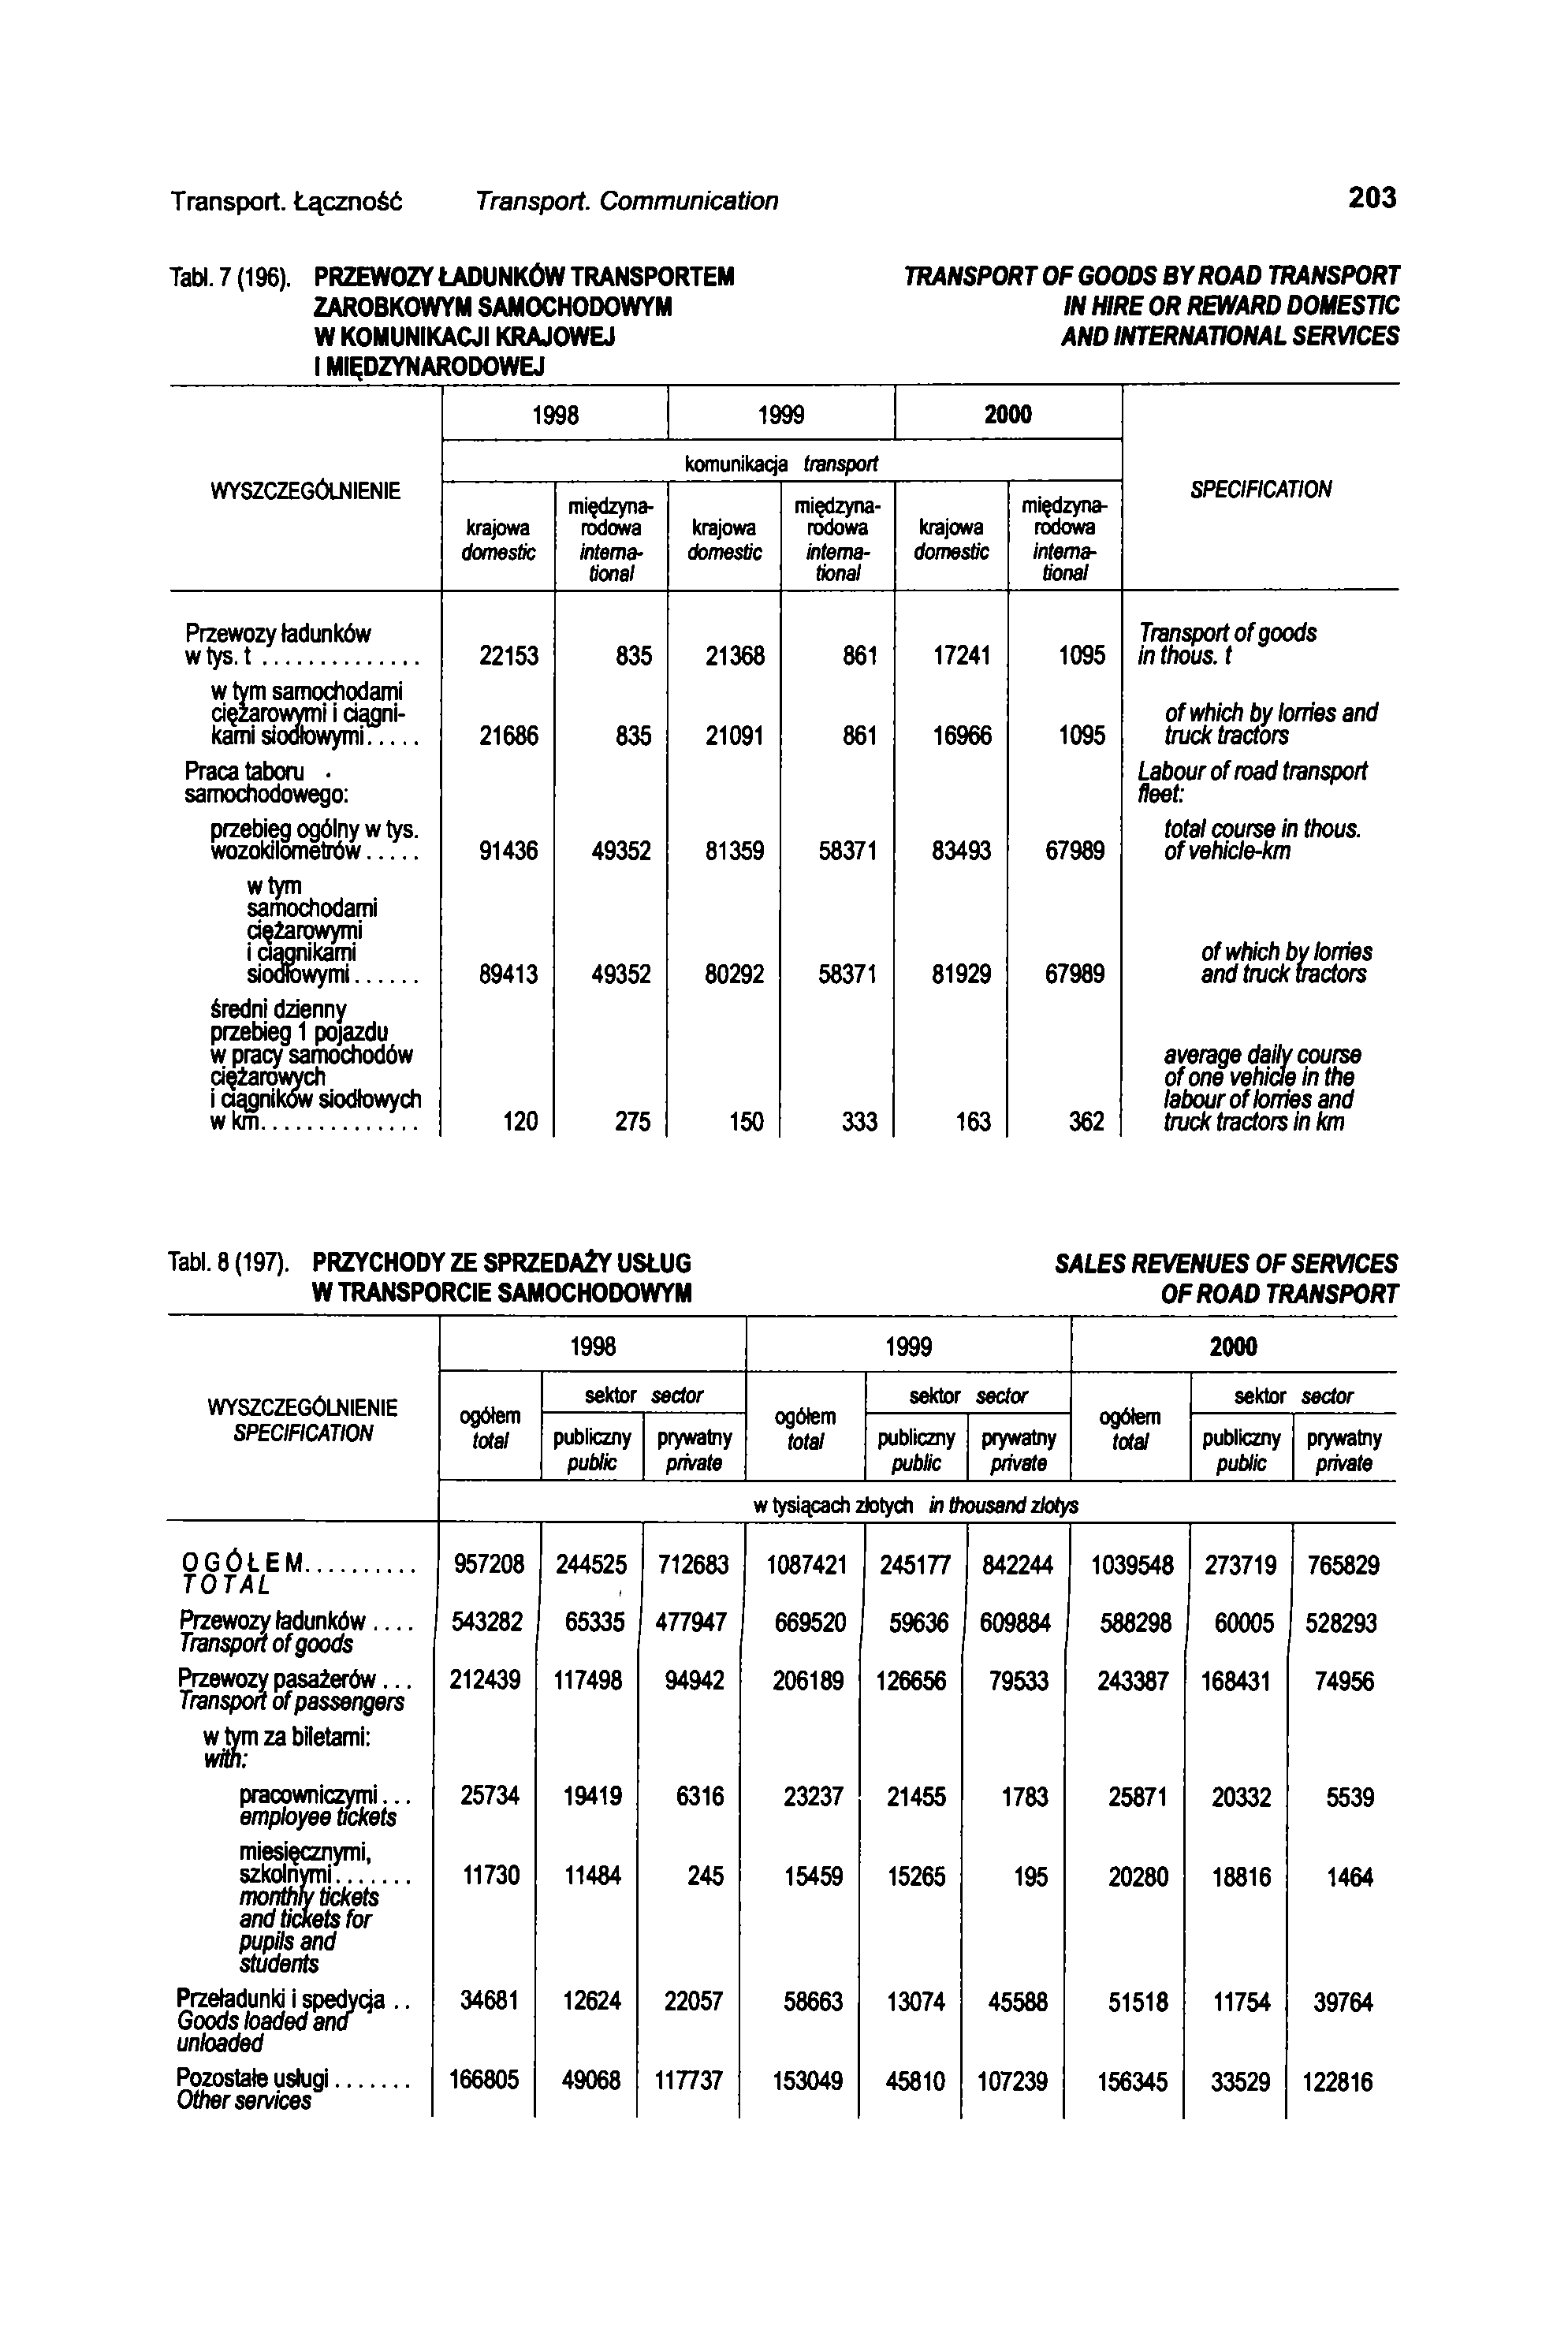 Transport. Łączność Transport. Communication 203 Tabl. 7 (196).